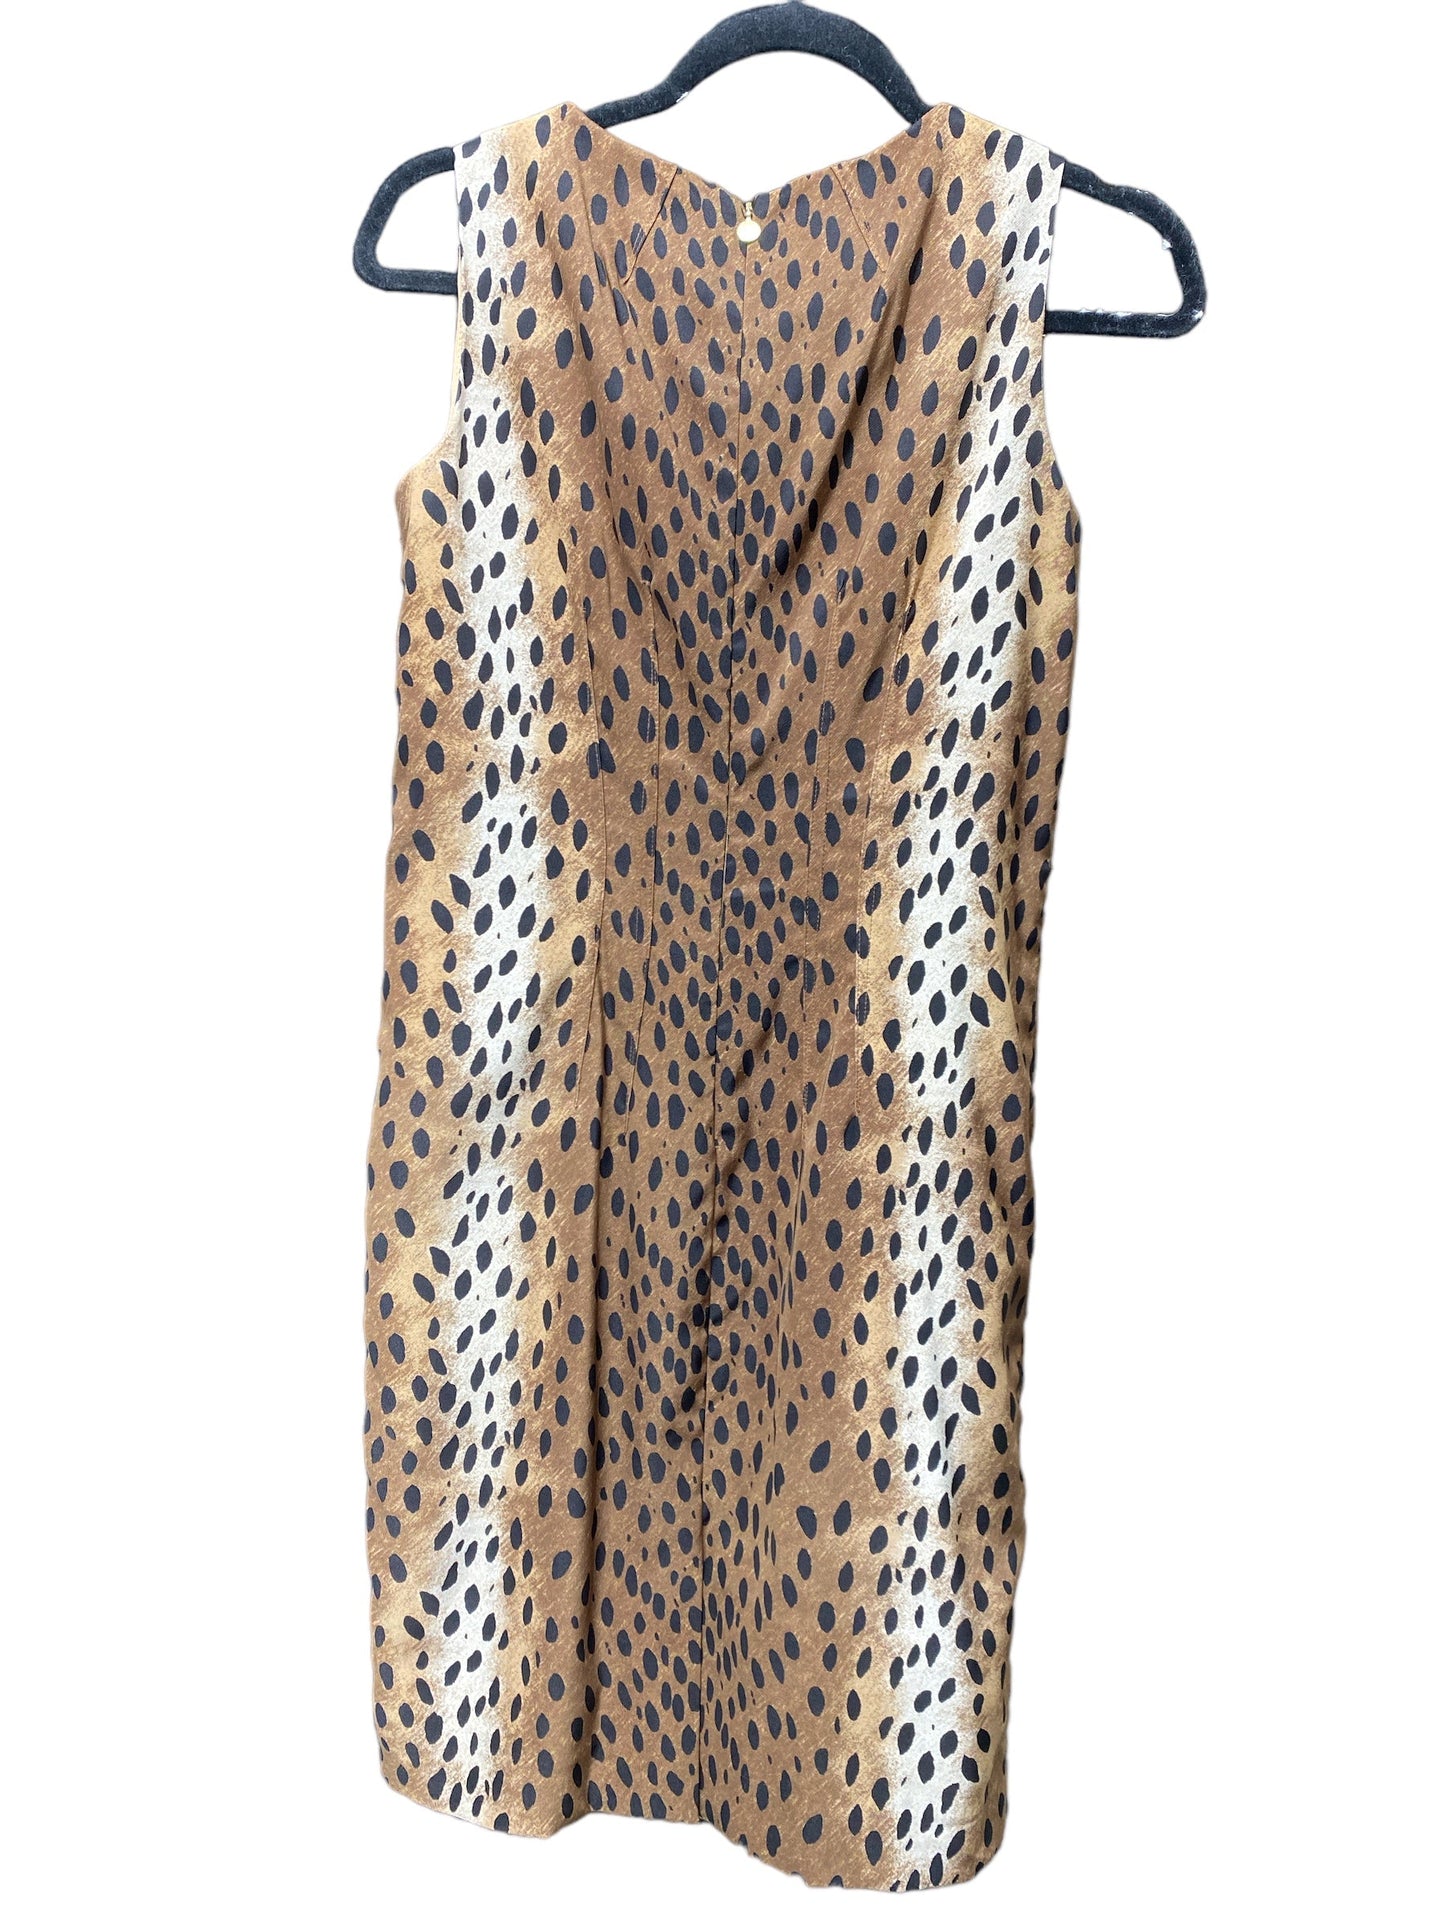 Animal Print Dress Casual Short Michael By Michael Kors, Size 4